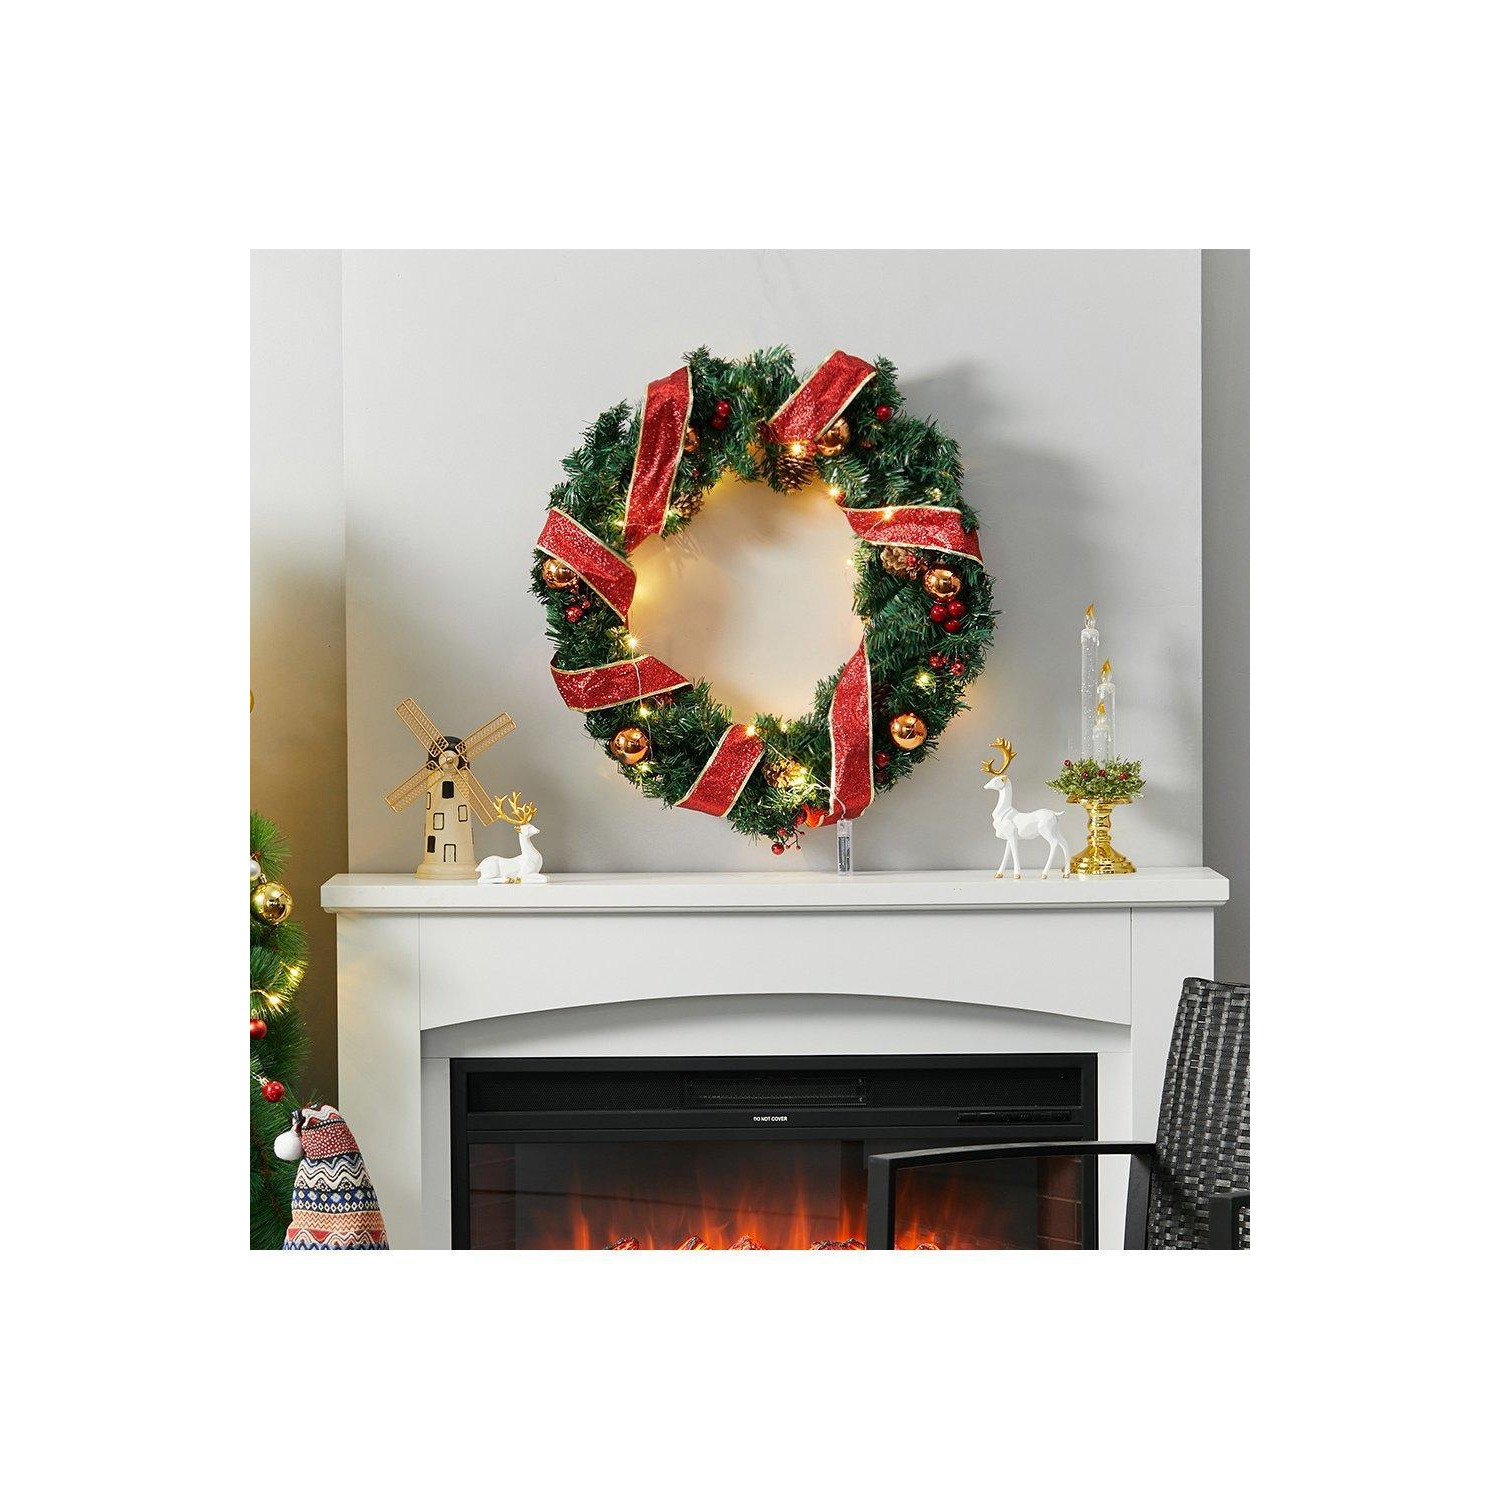 D60cm Ribbon Lighted Wreath Hanging Christmas Decor - image 1